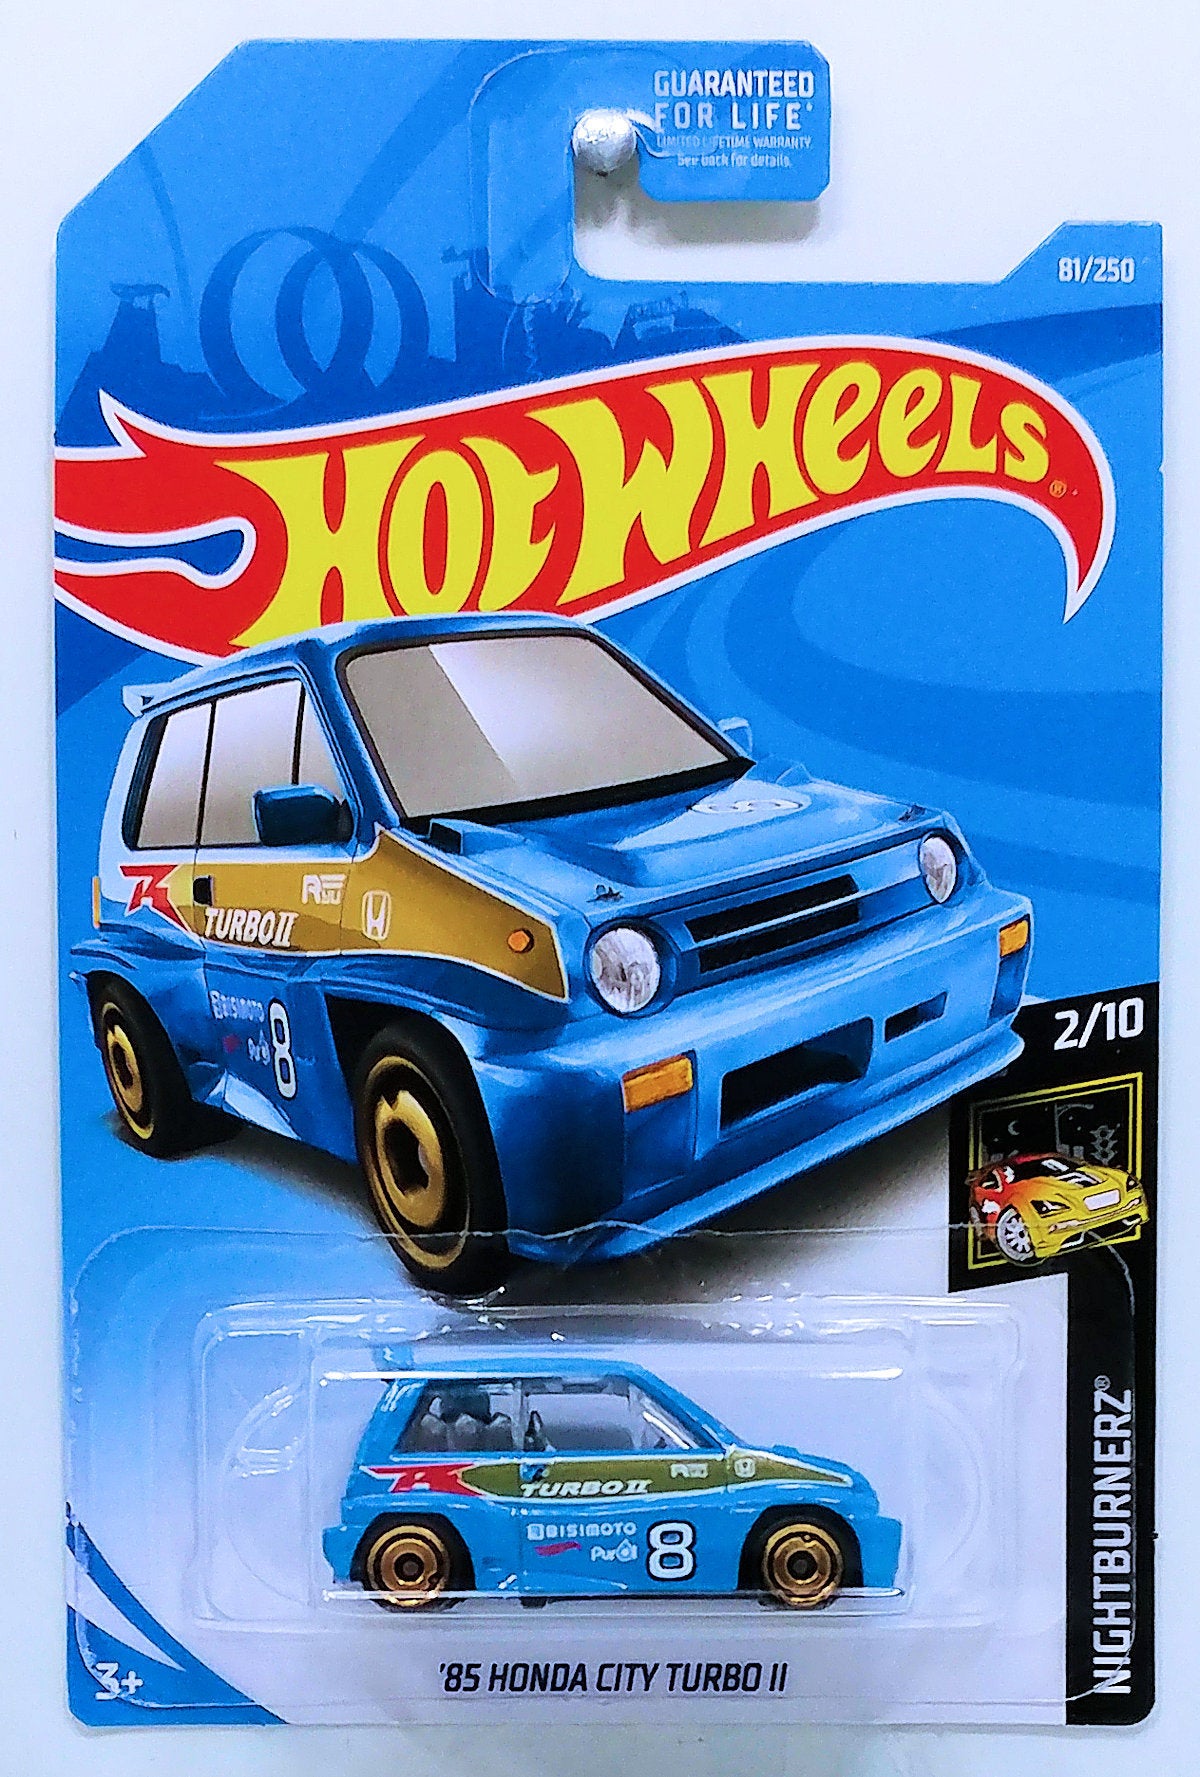 Hot Wheels 2019 - Collector # 081/250 - Nightburnerz 2/10 - '85 Honda City Turbo II - Blue - USA